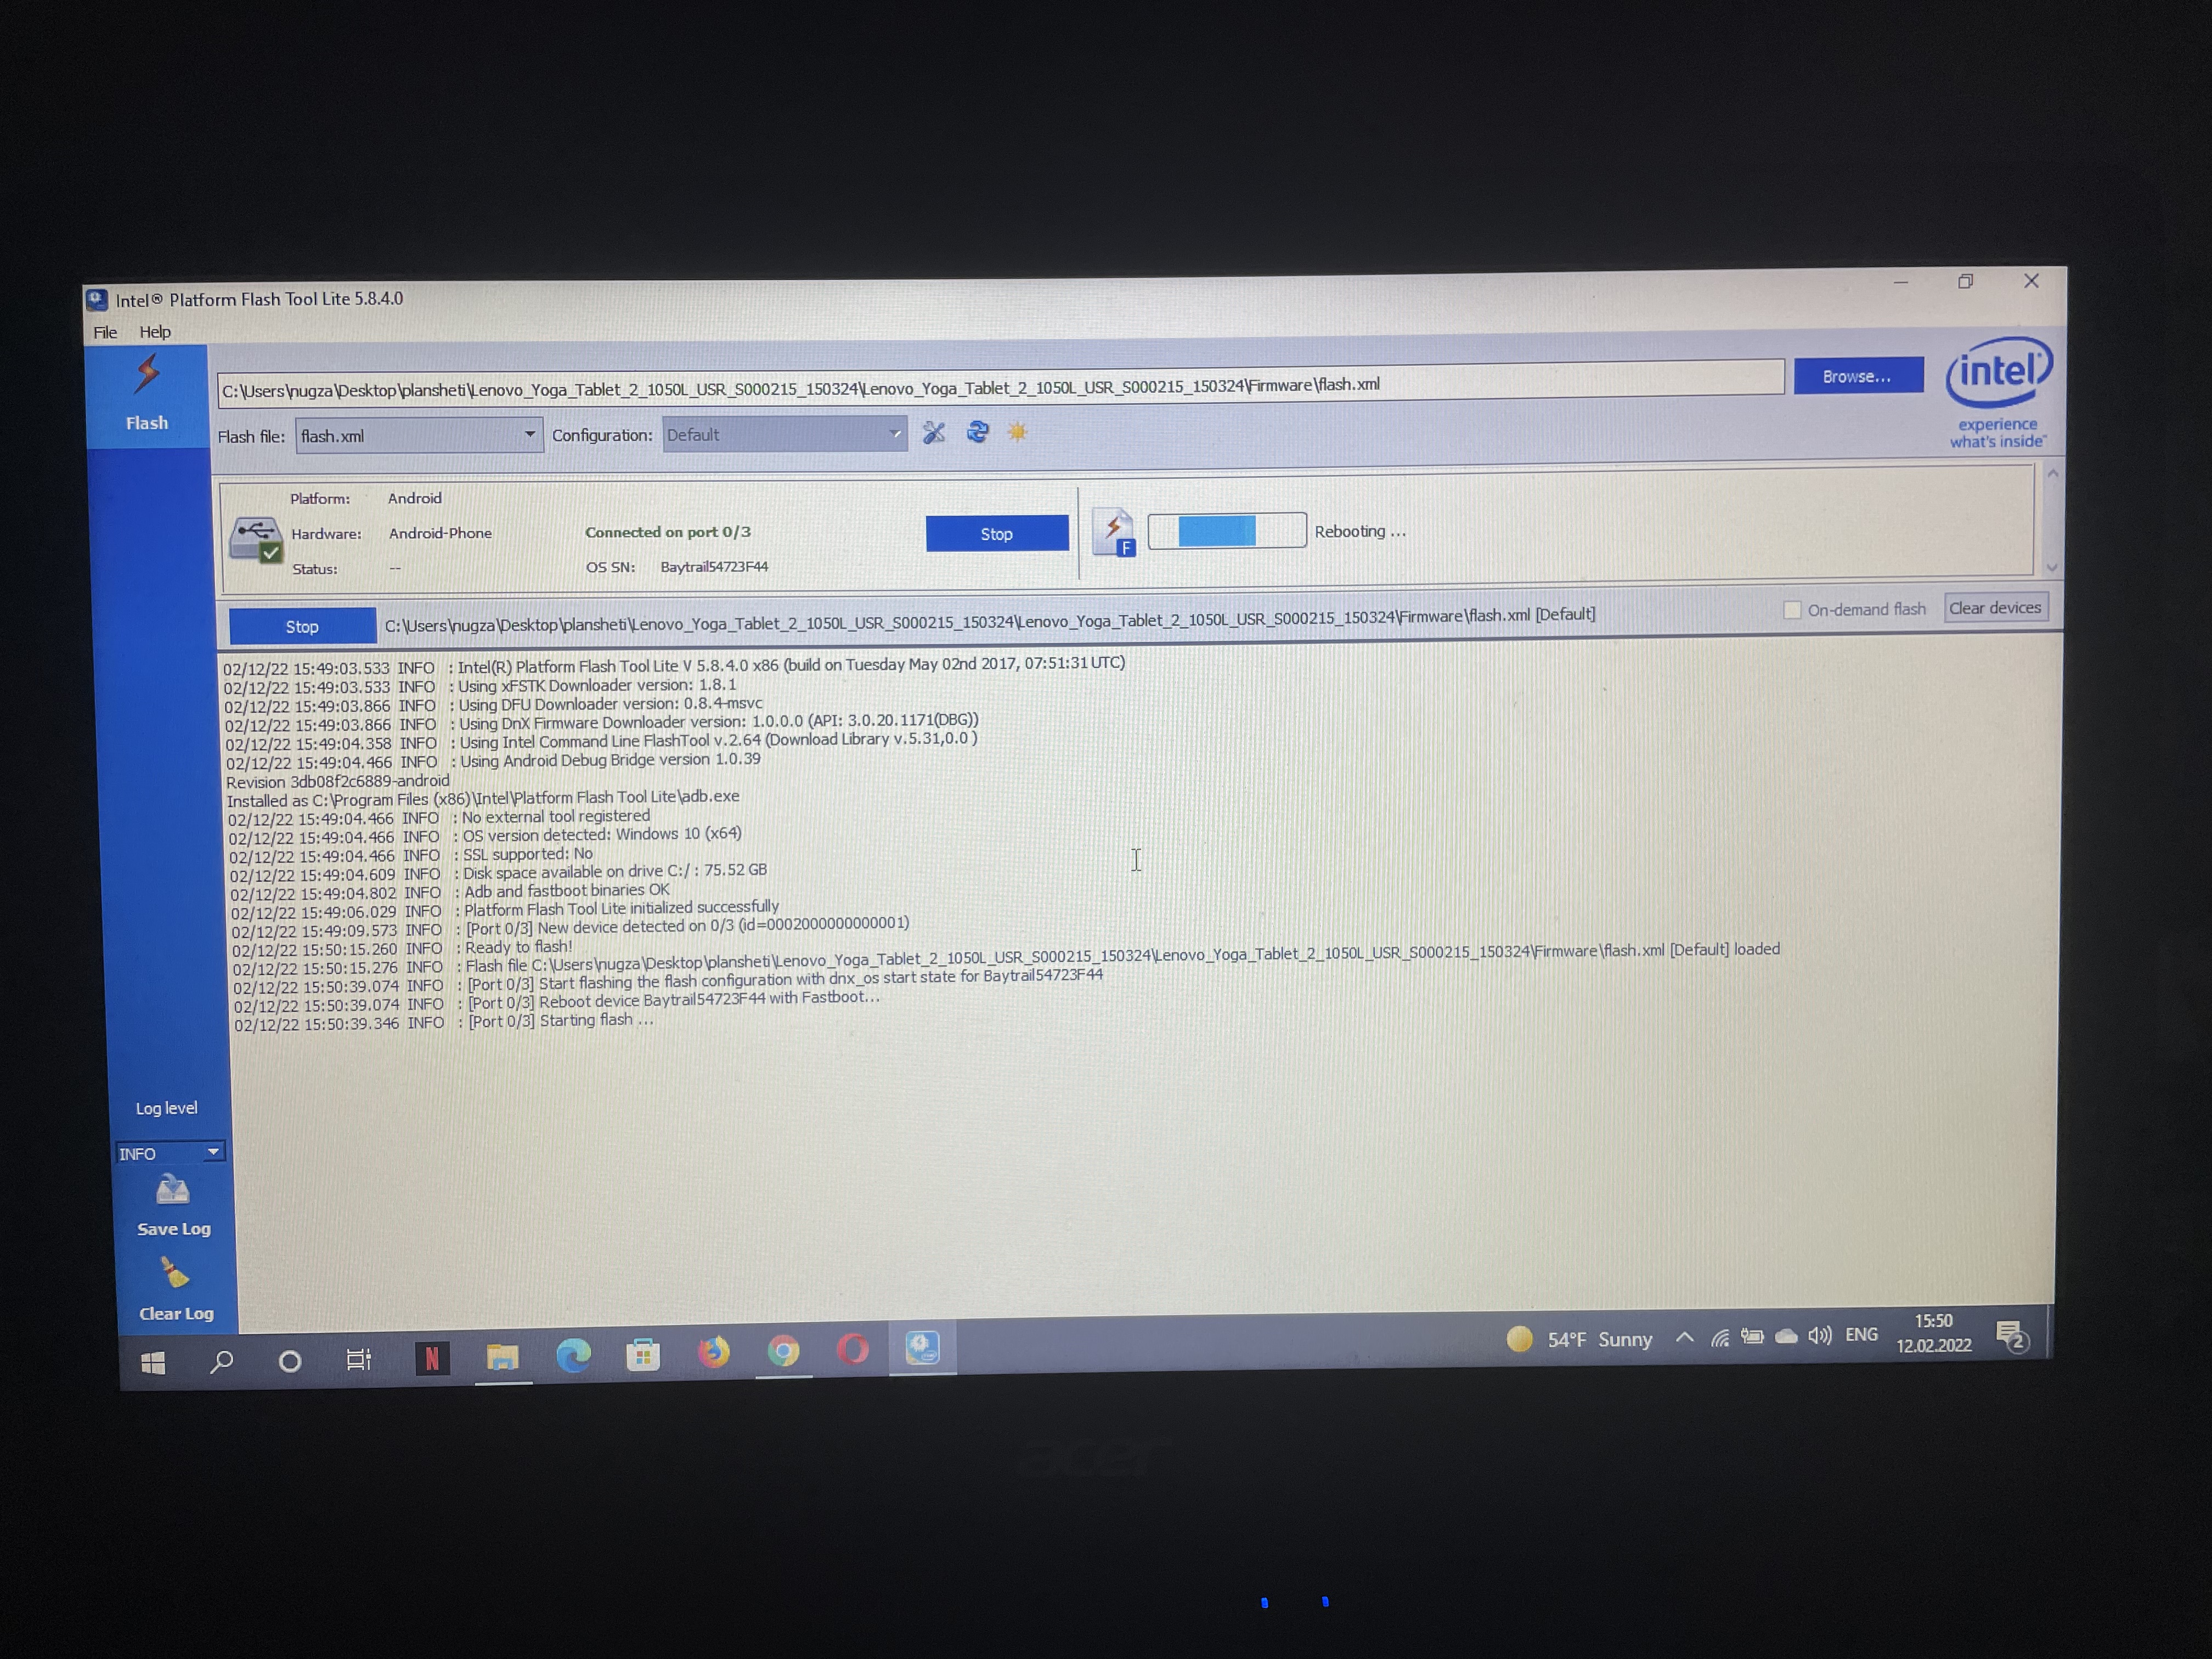 Downgrading software on my lenovo yoga tab 2 1050L - Intel Community